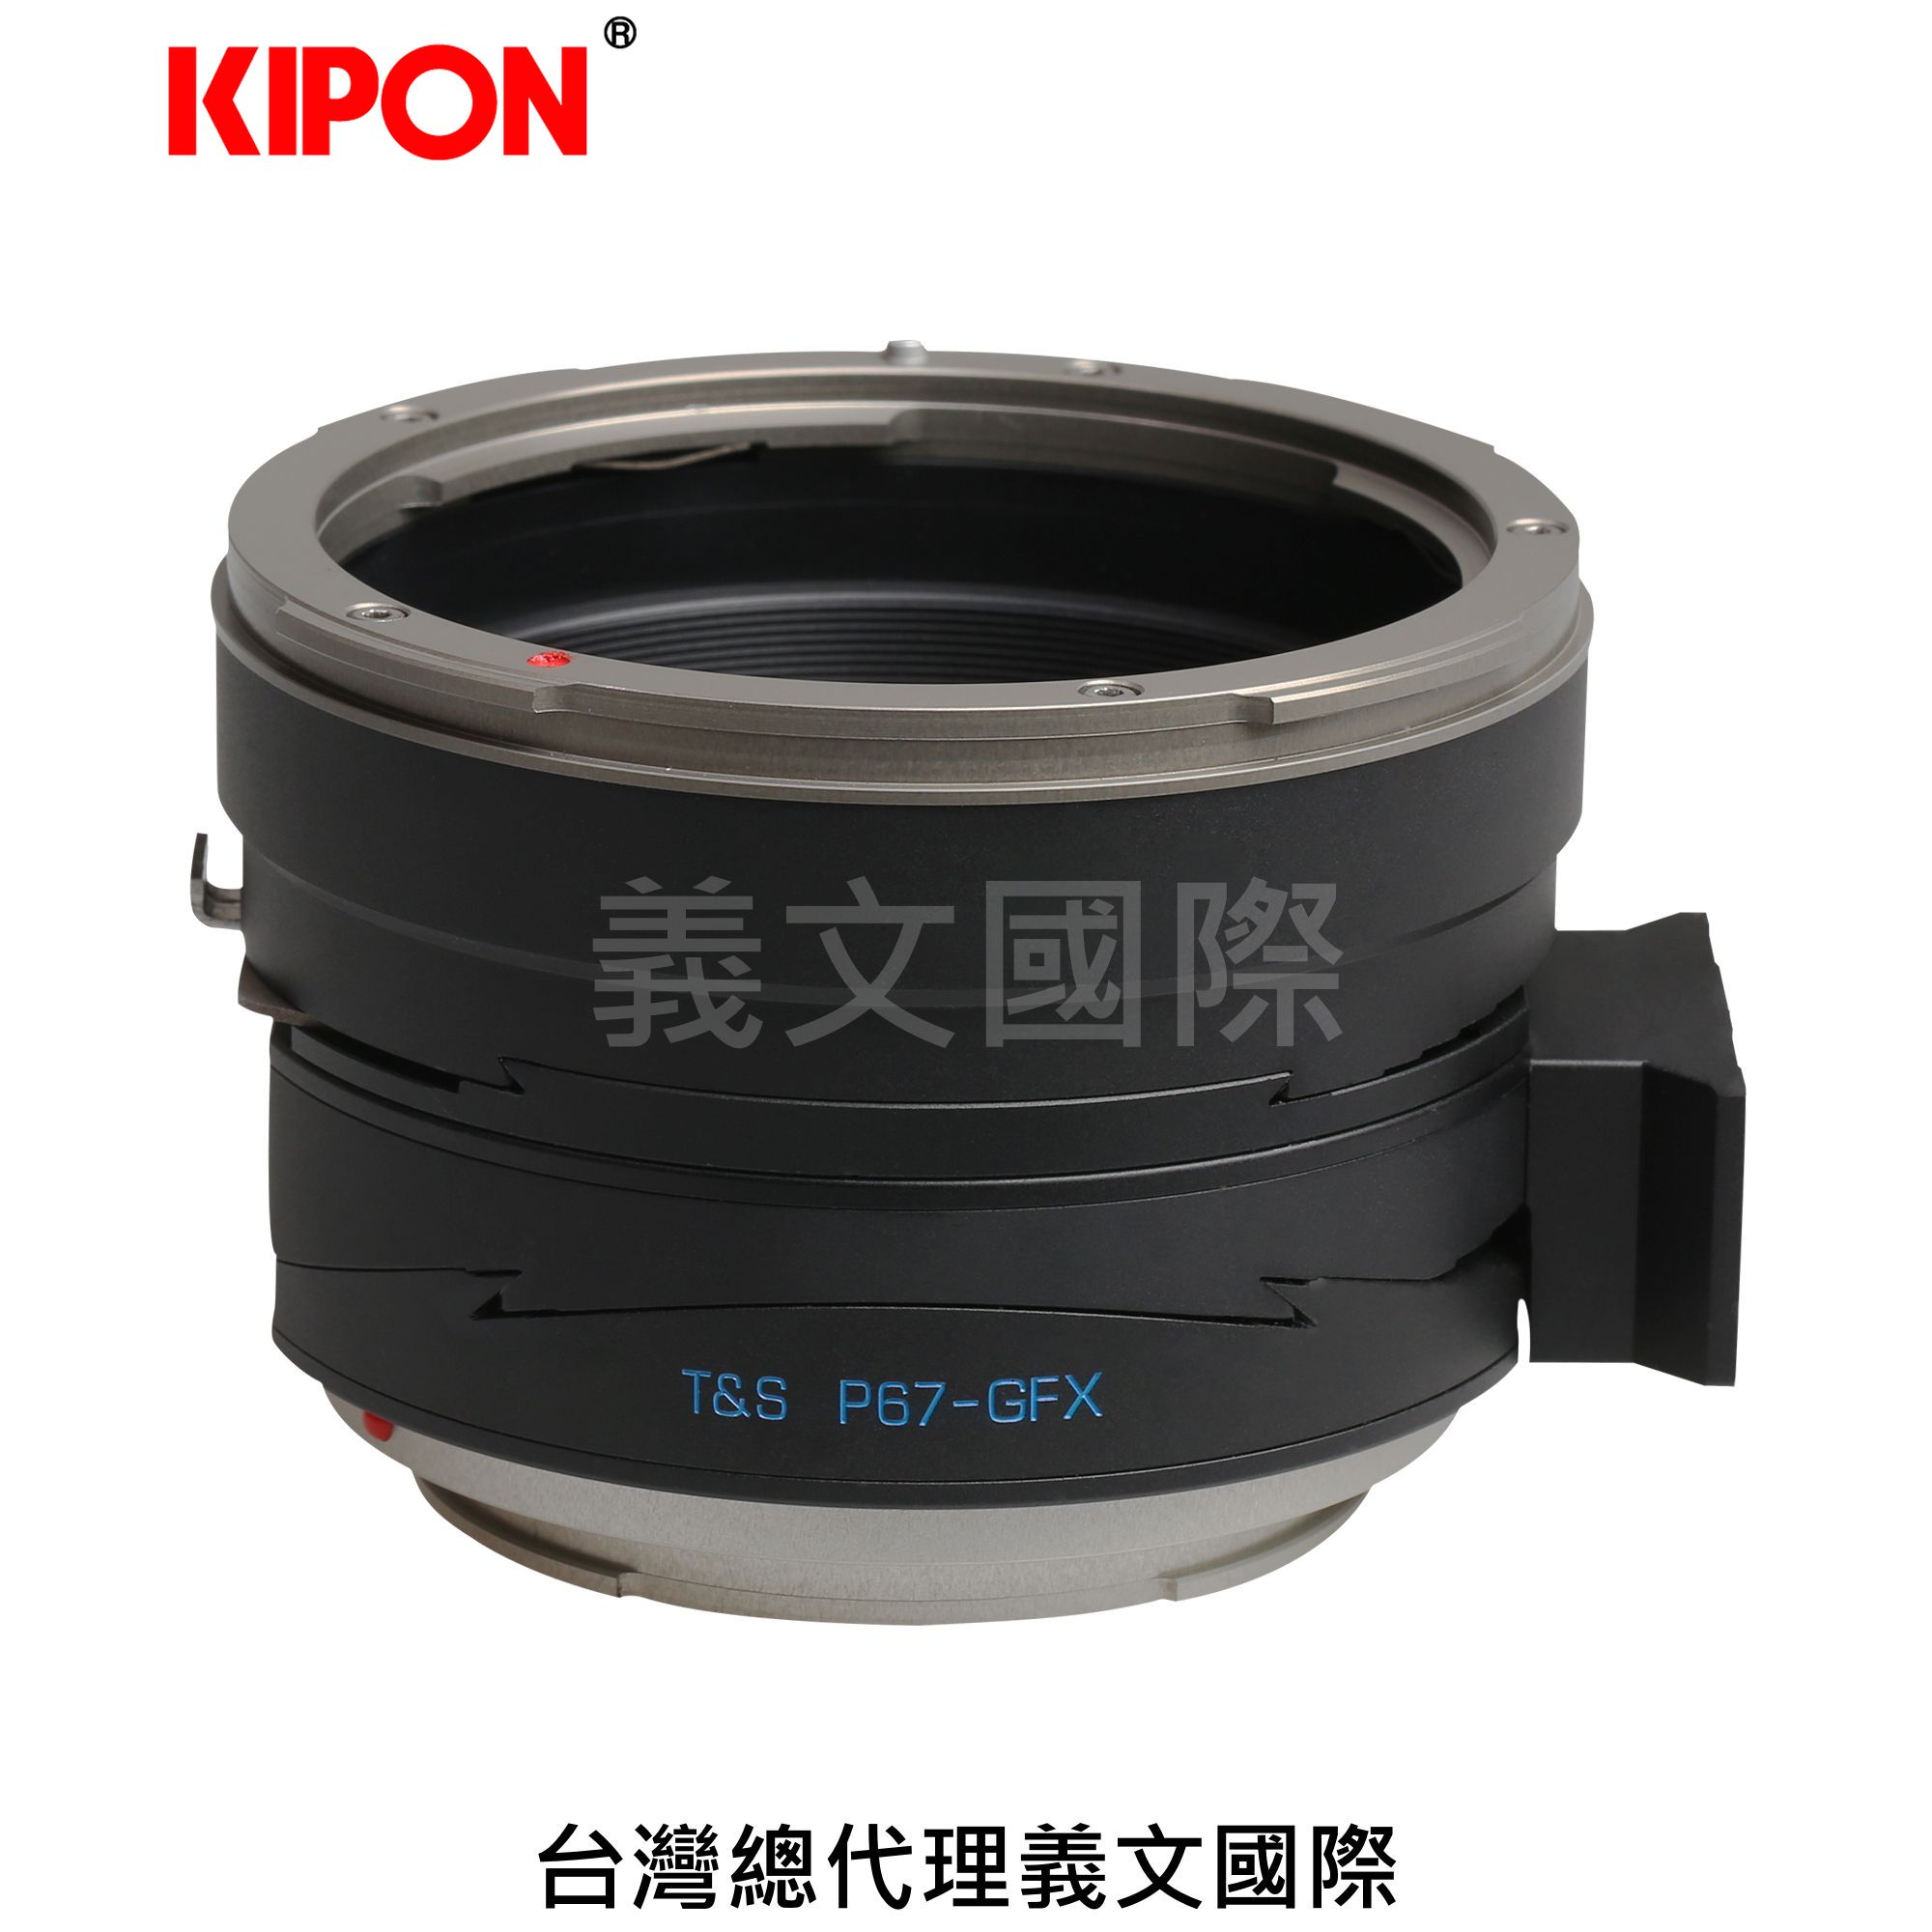 Kipon轉接環專賣店:PRO T&S PENTAX67-GFX(Fuji,富士,GFX-100,GFX-50S,GFX-50R)